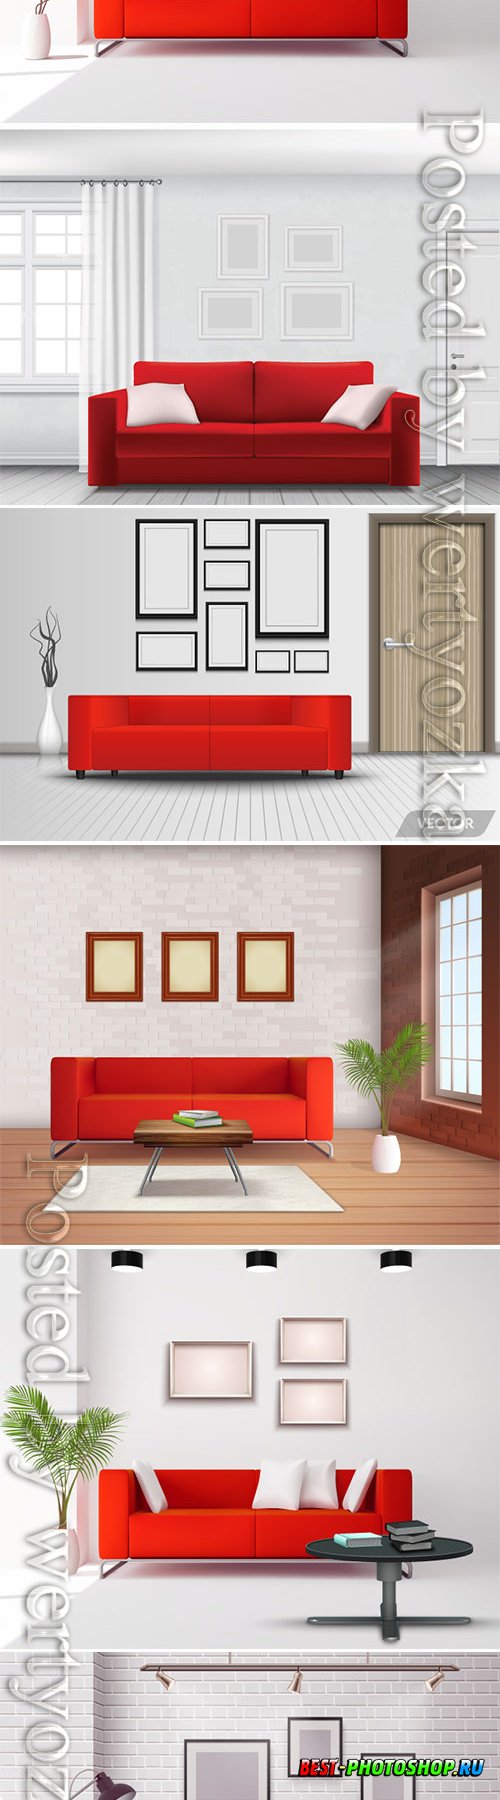 Realistic home interior vector template # 2